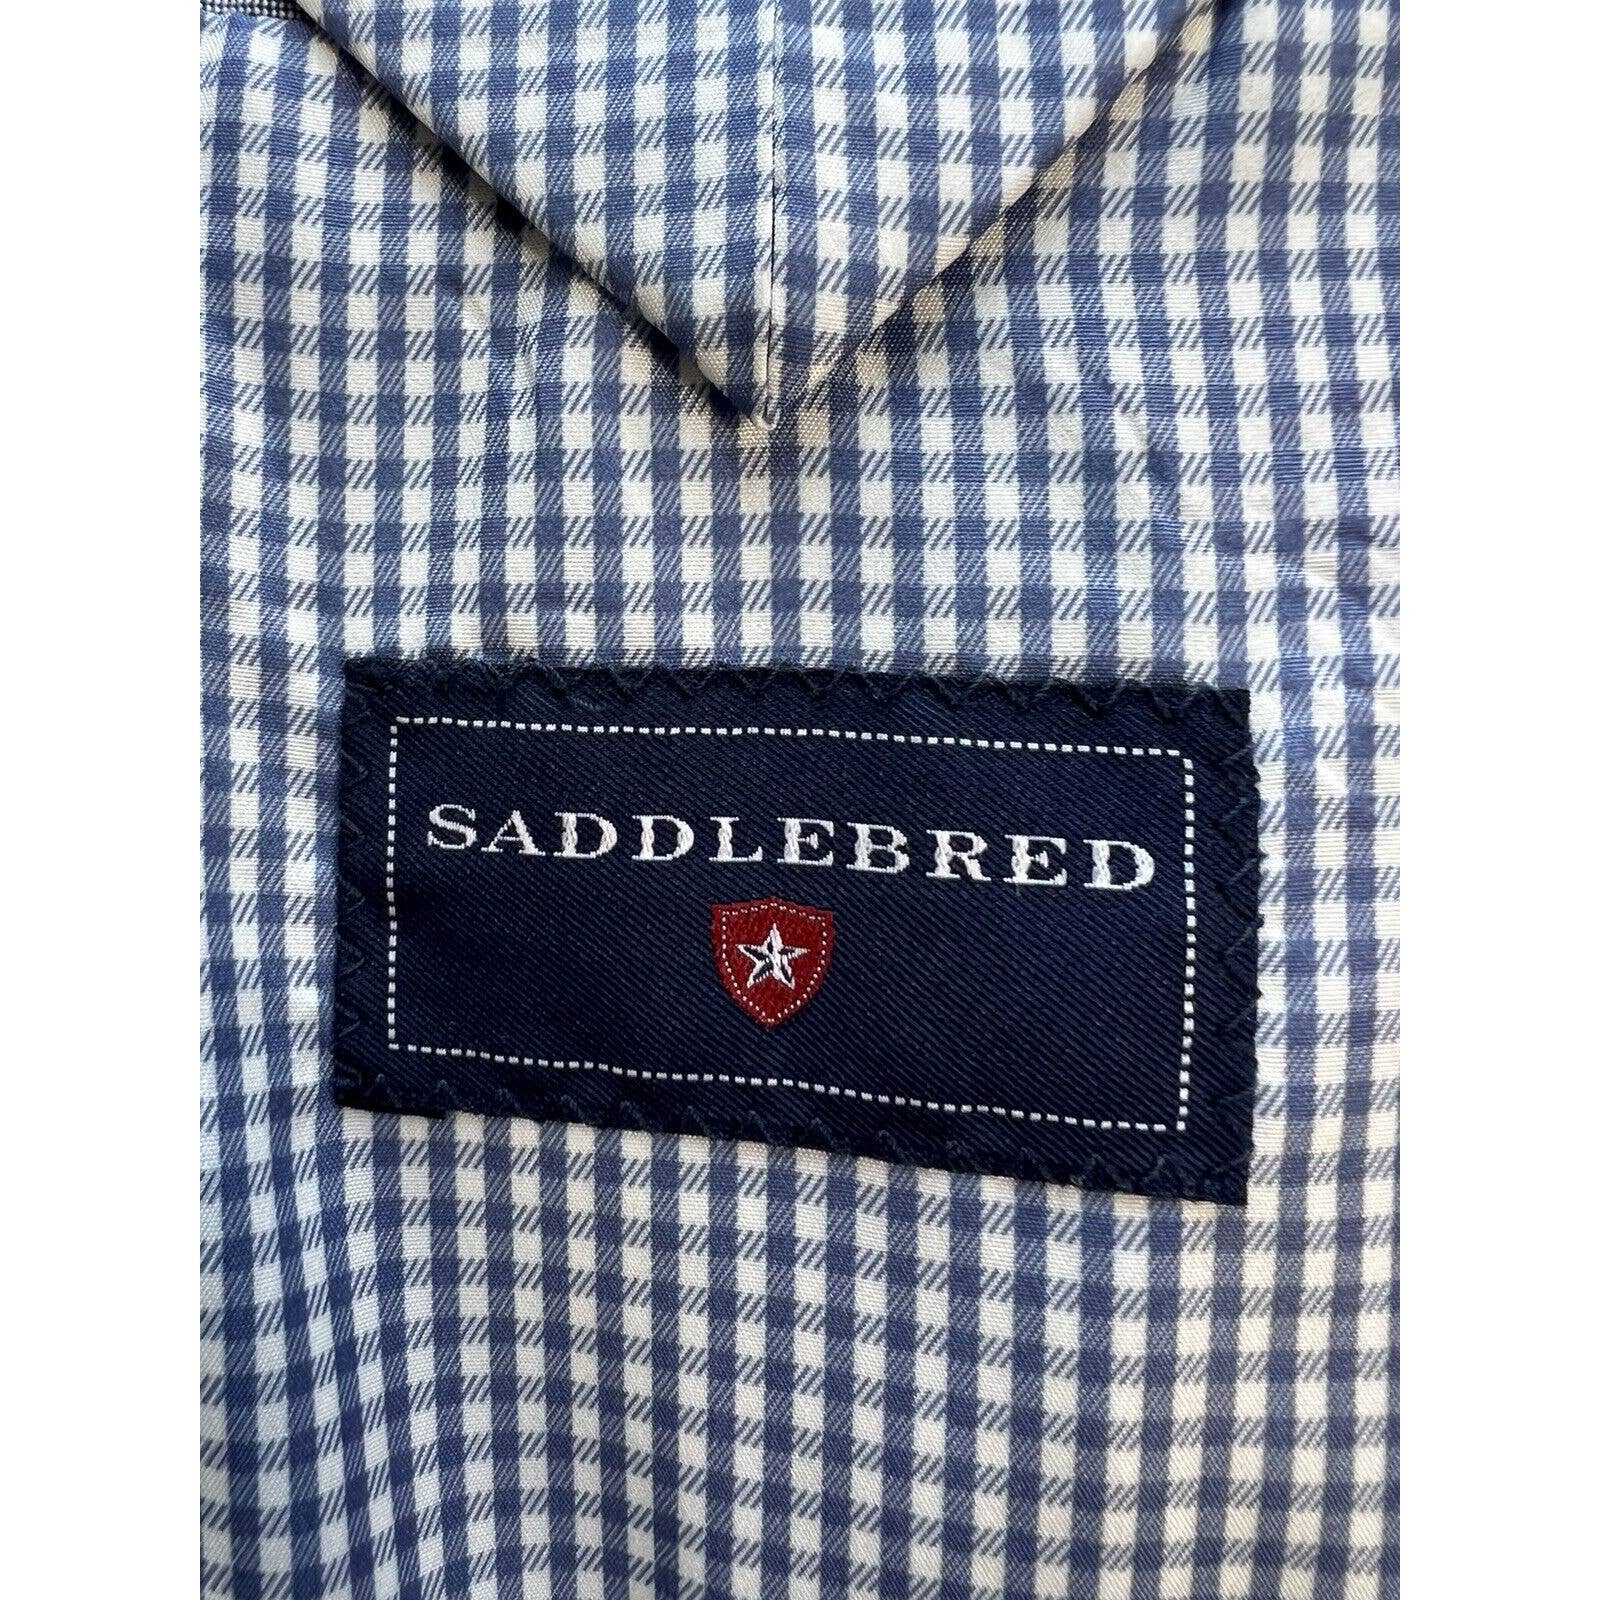 Saddlebred 2 Button Sport Coat Men’s 50R Cotton Jacket Blazer Blue Casual